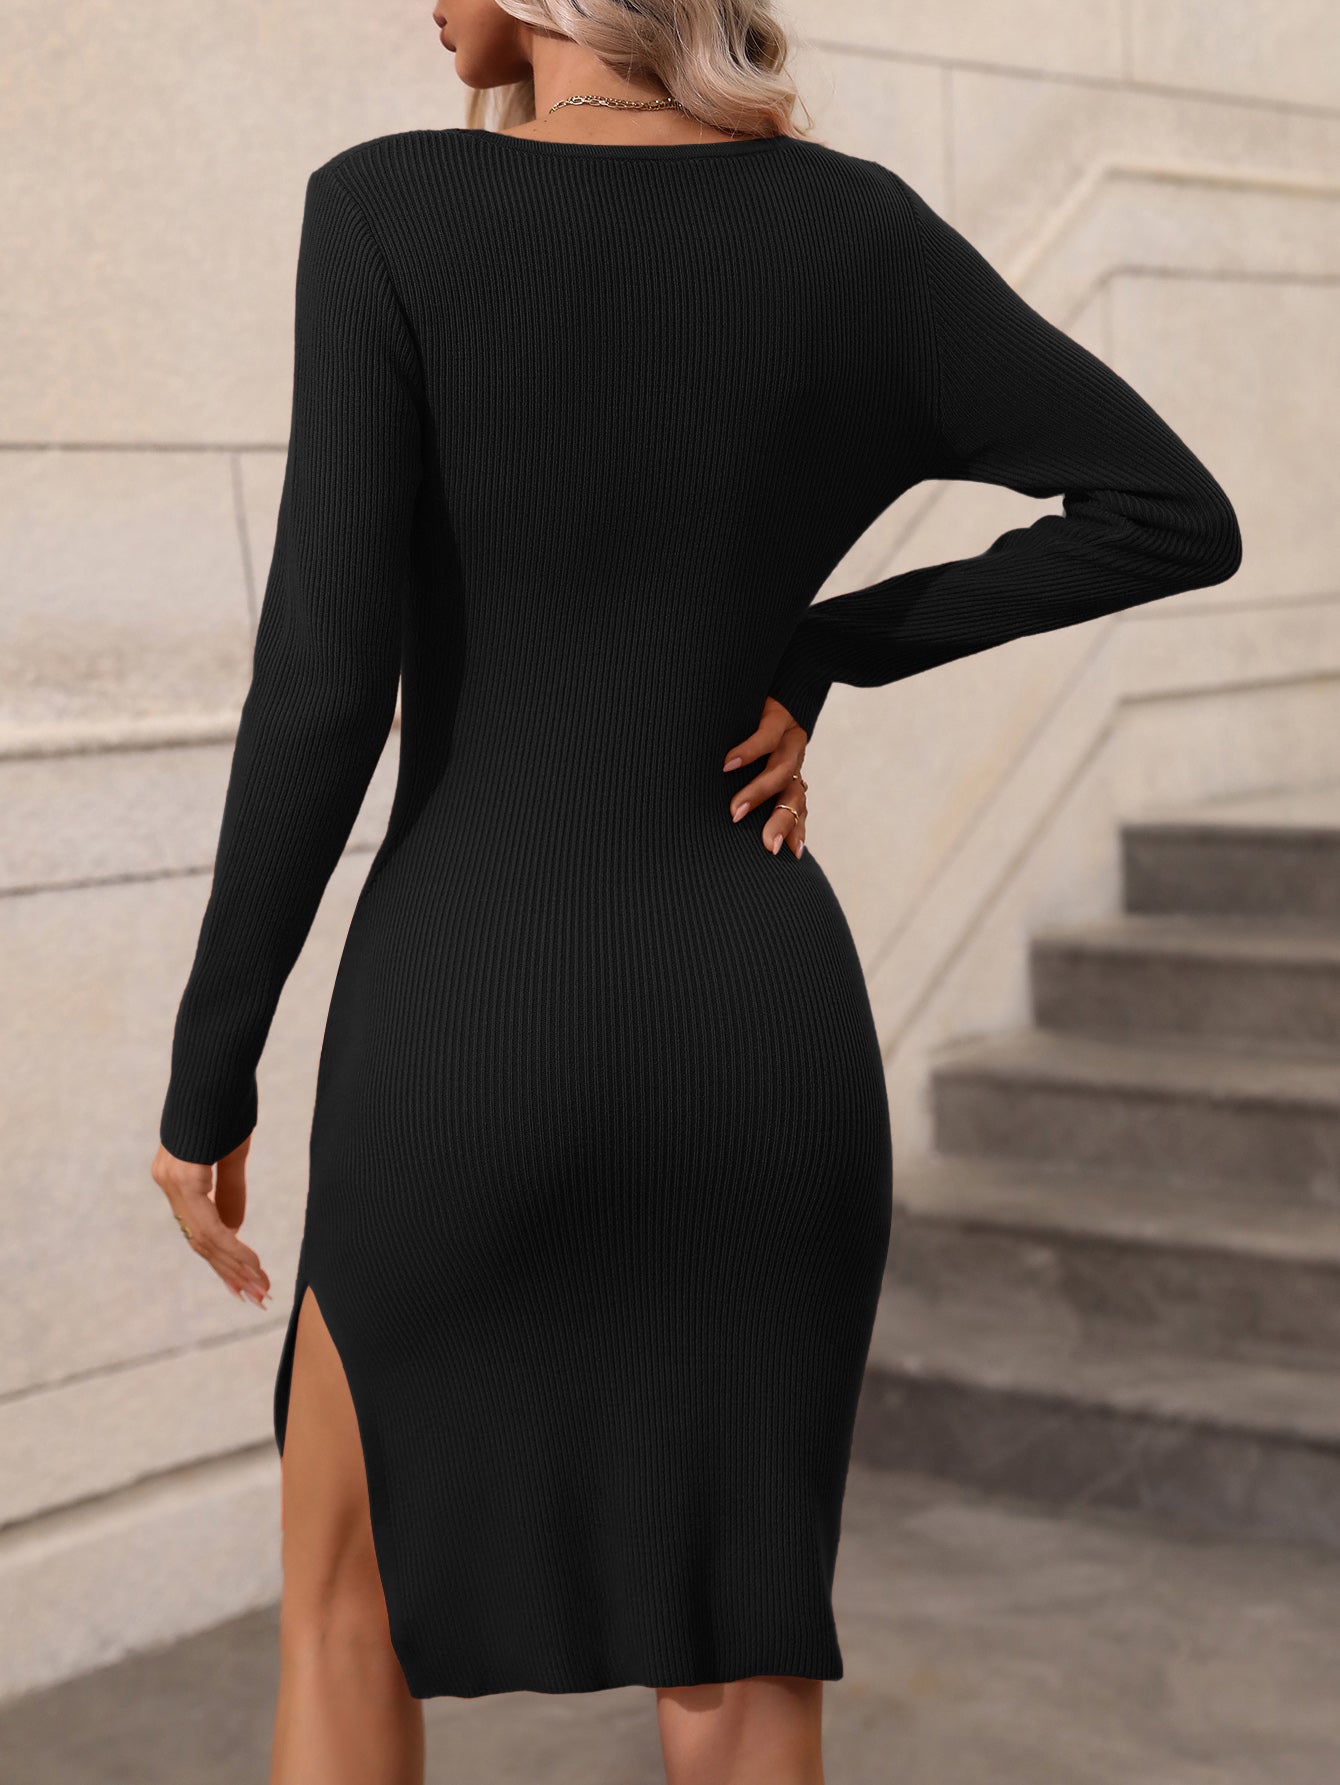 Woven Right Contrast Slit Sweater Dress - TiffanyzKlozet